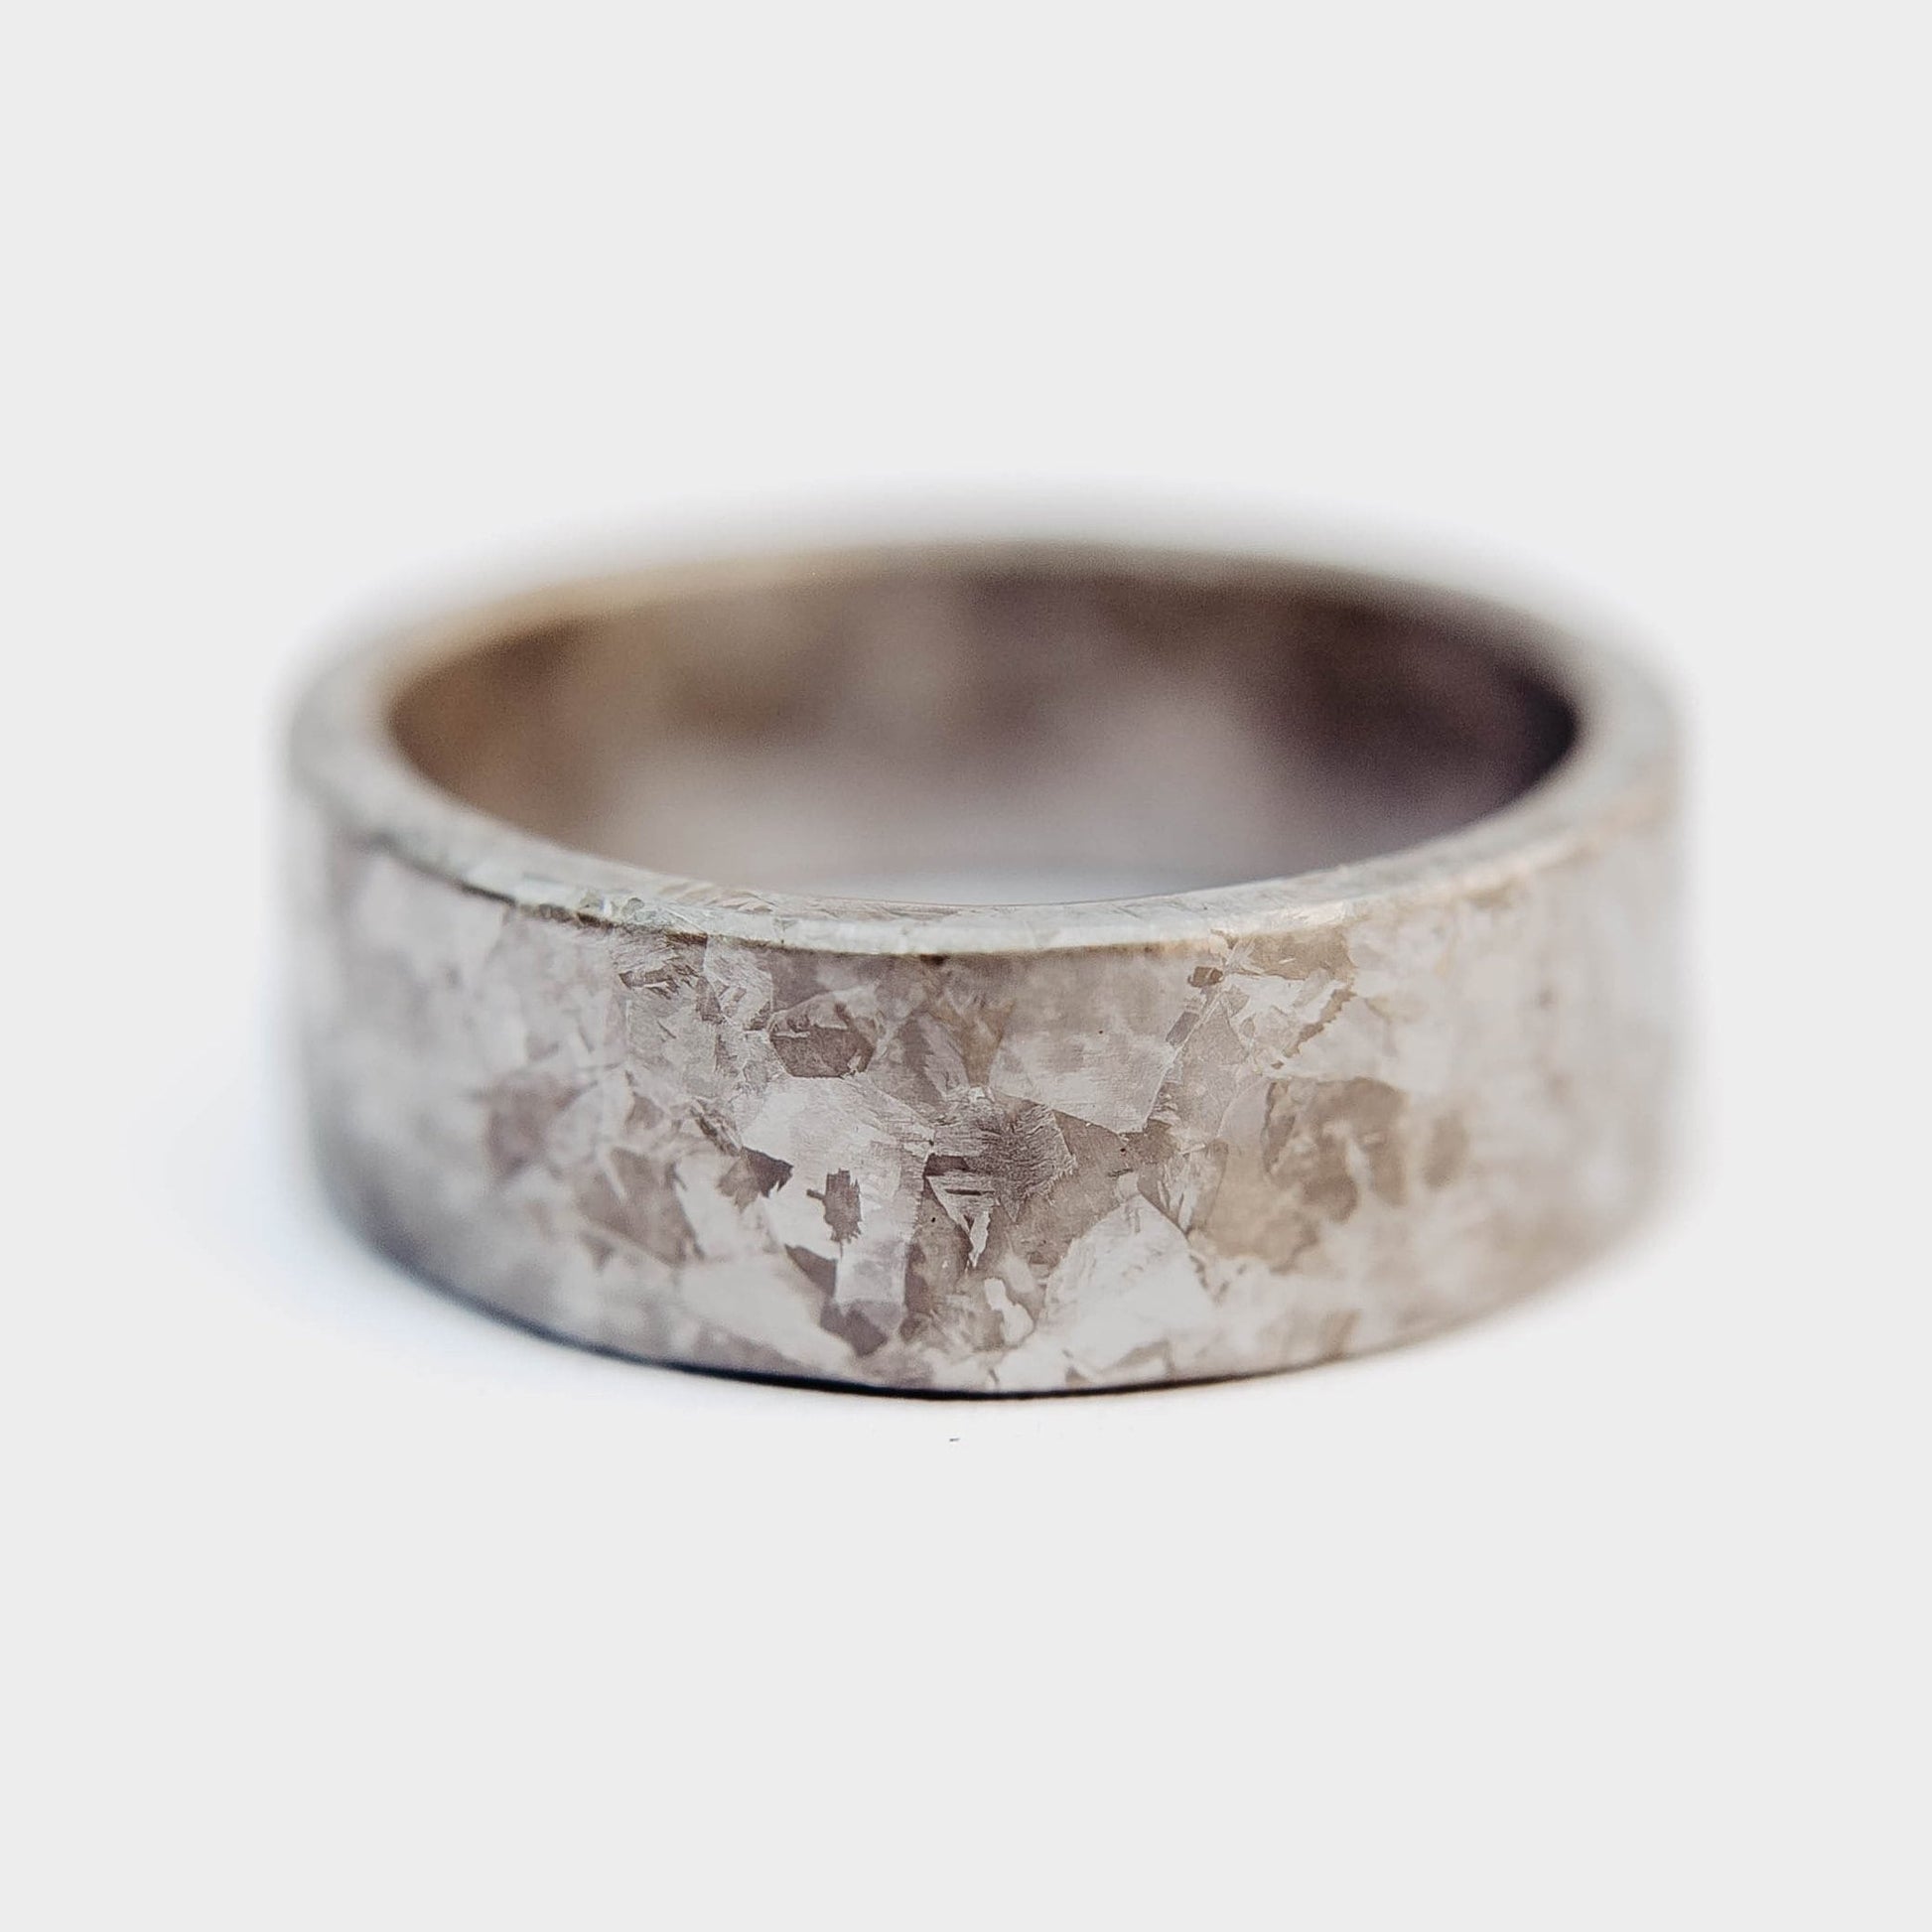 Crystallized Titanium Wedding Band. Gray titanium ring with crystallized surface. (Horizontall with pine sprig background)